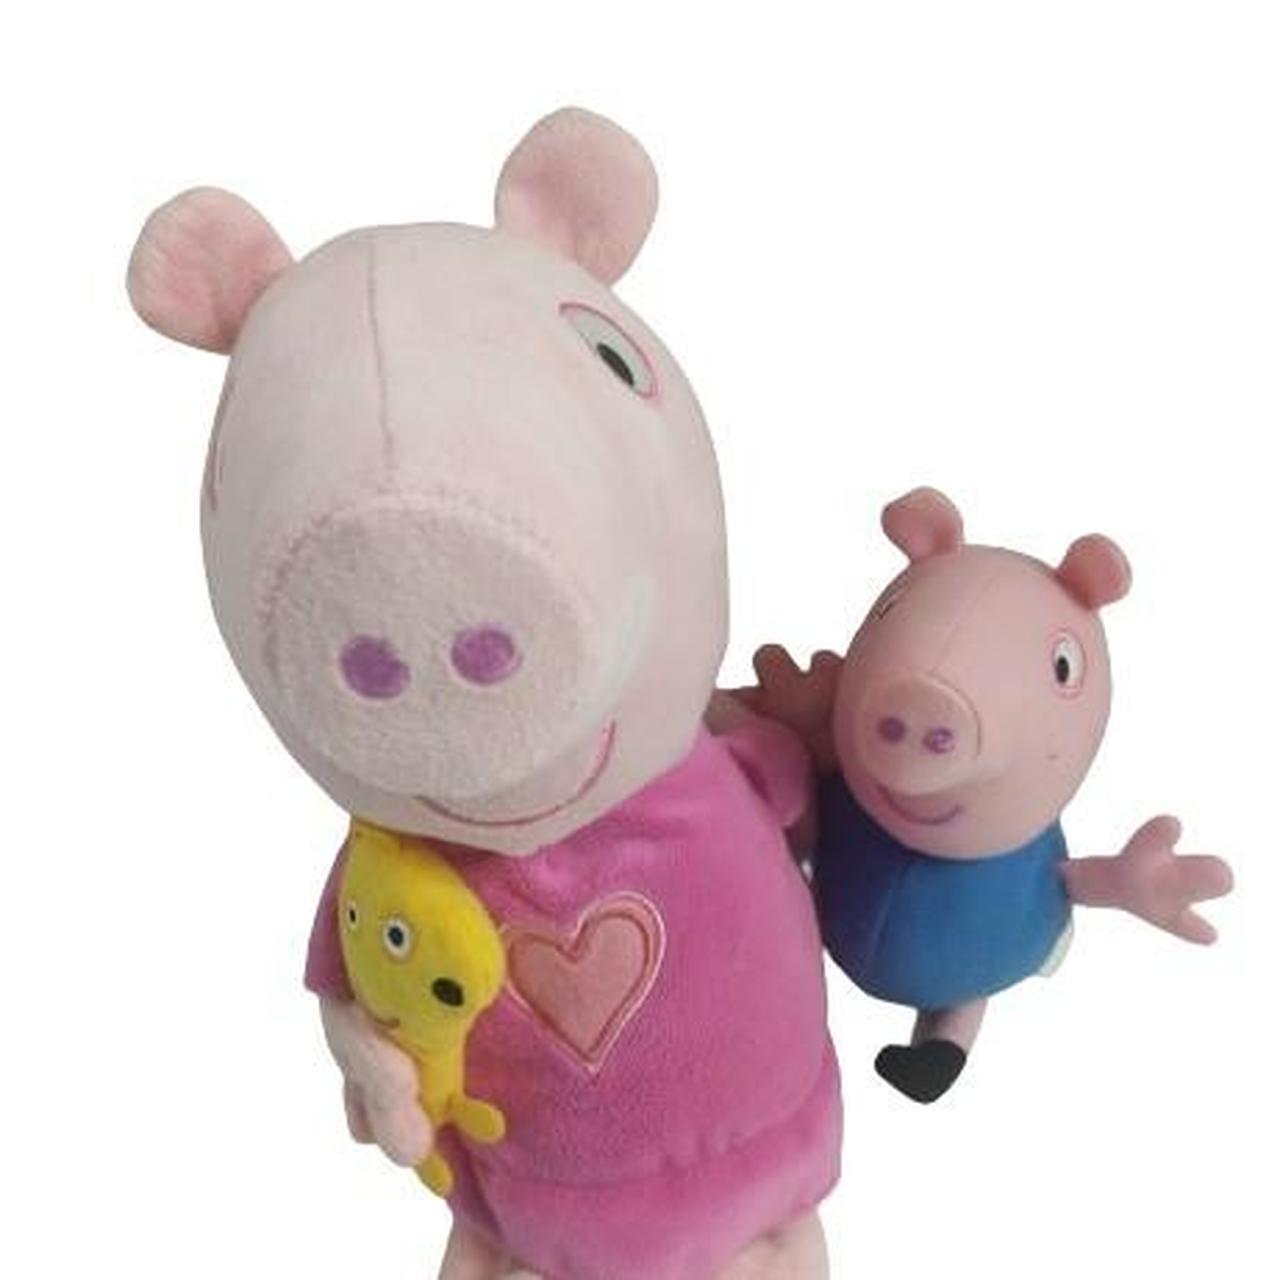  Peppa Pig Sleep N' Oink Plush Stuffed Animal Toy